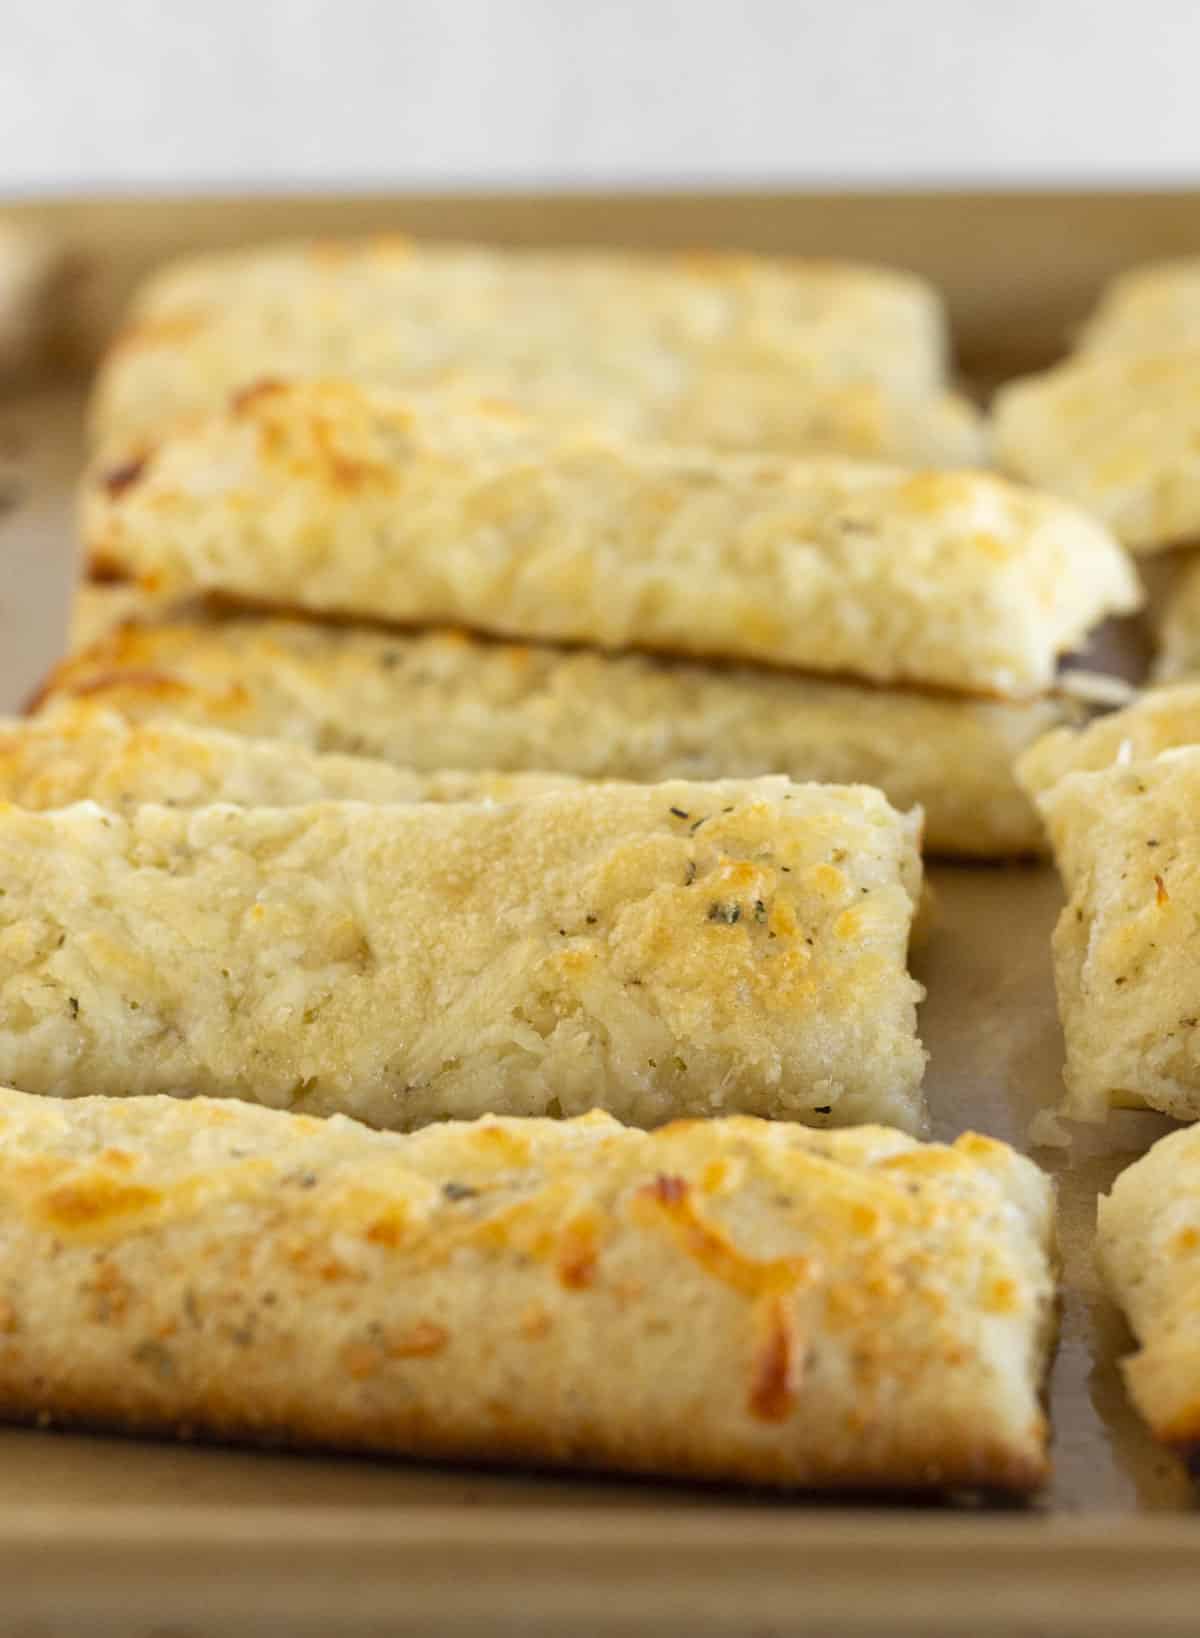 Cheesy breadsticks on a baking sheet.